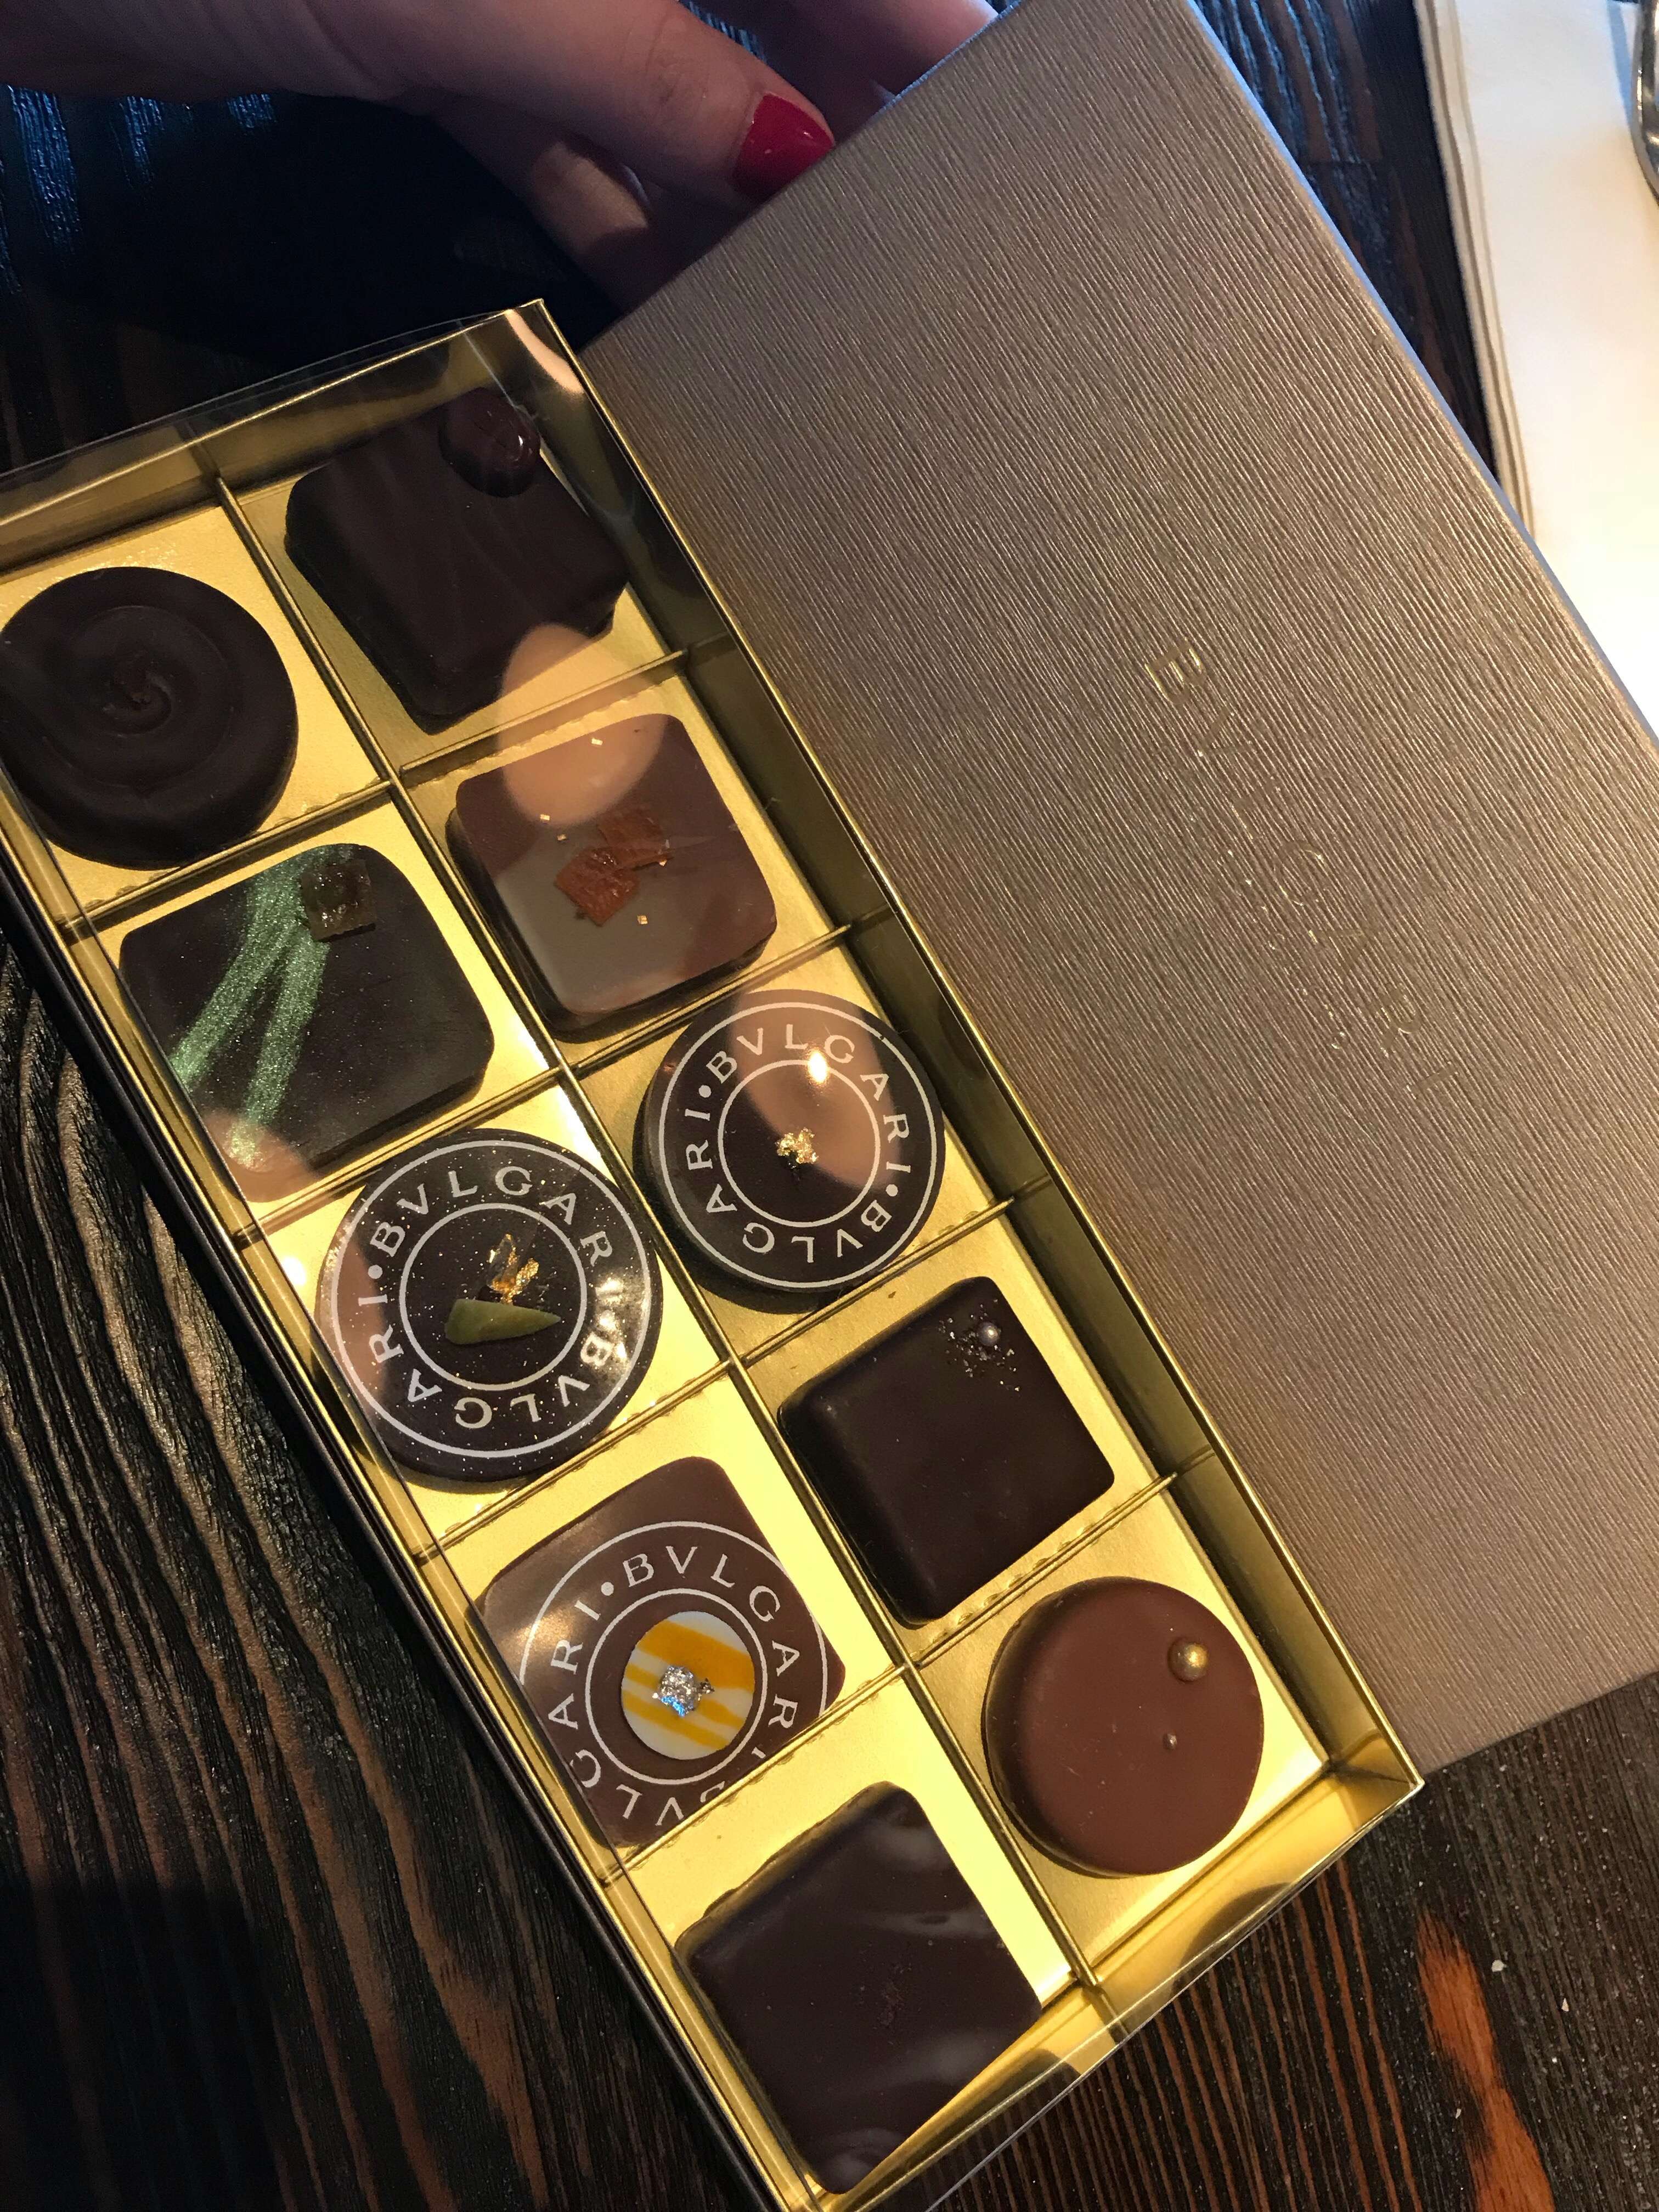 Bvlgari Il Cioccolato, Al Safa, Dubai